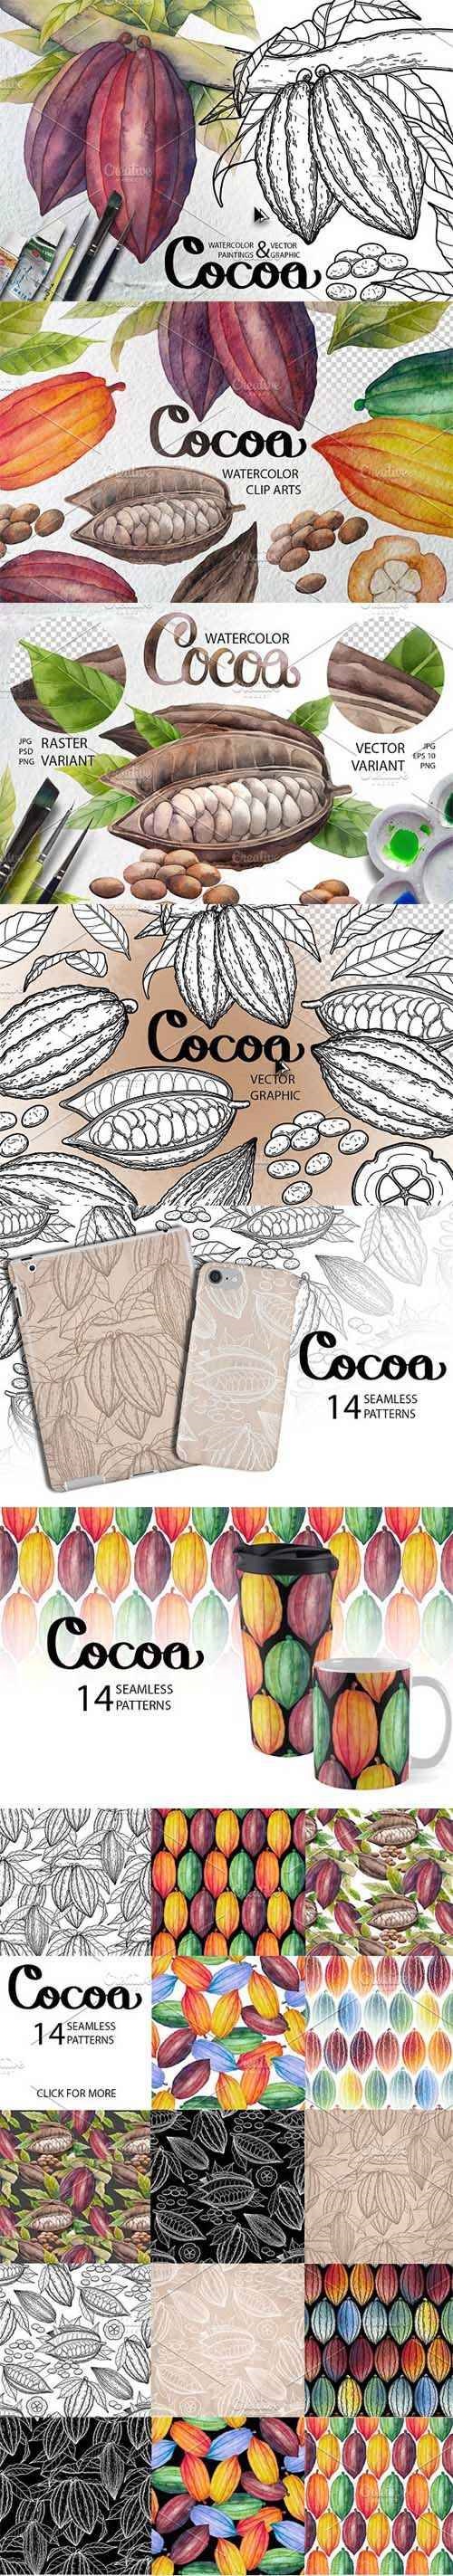 Watercolor and Graphic Cocoa Plants - 1641672